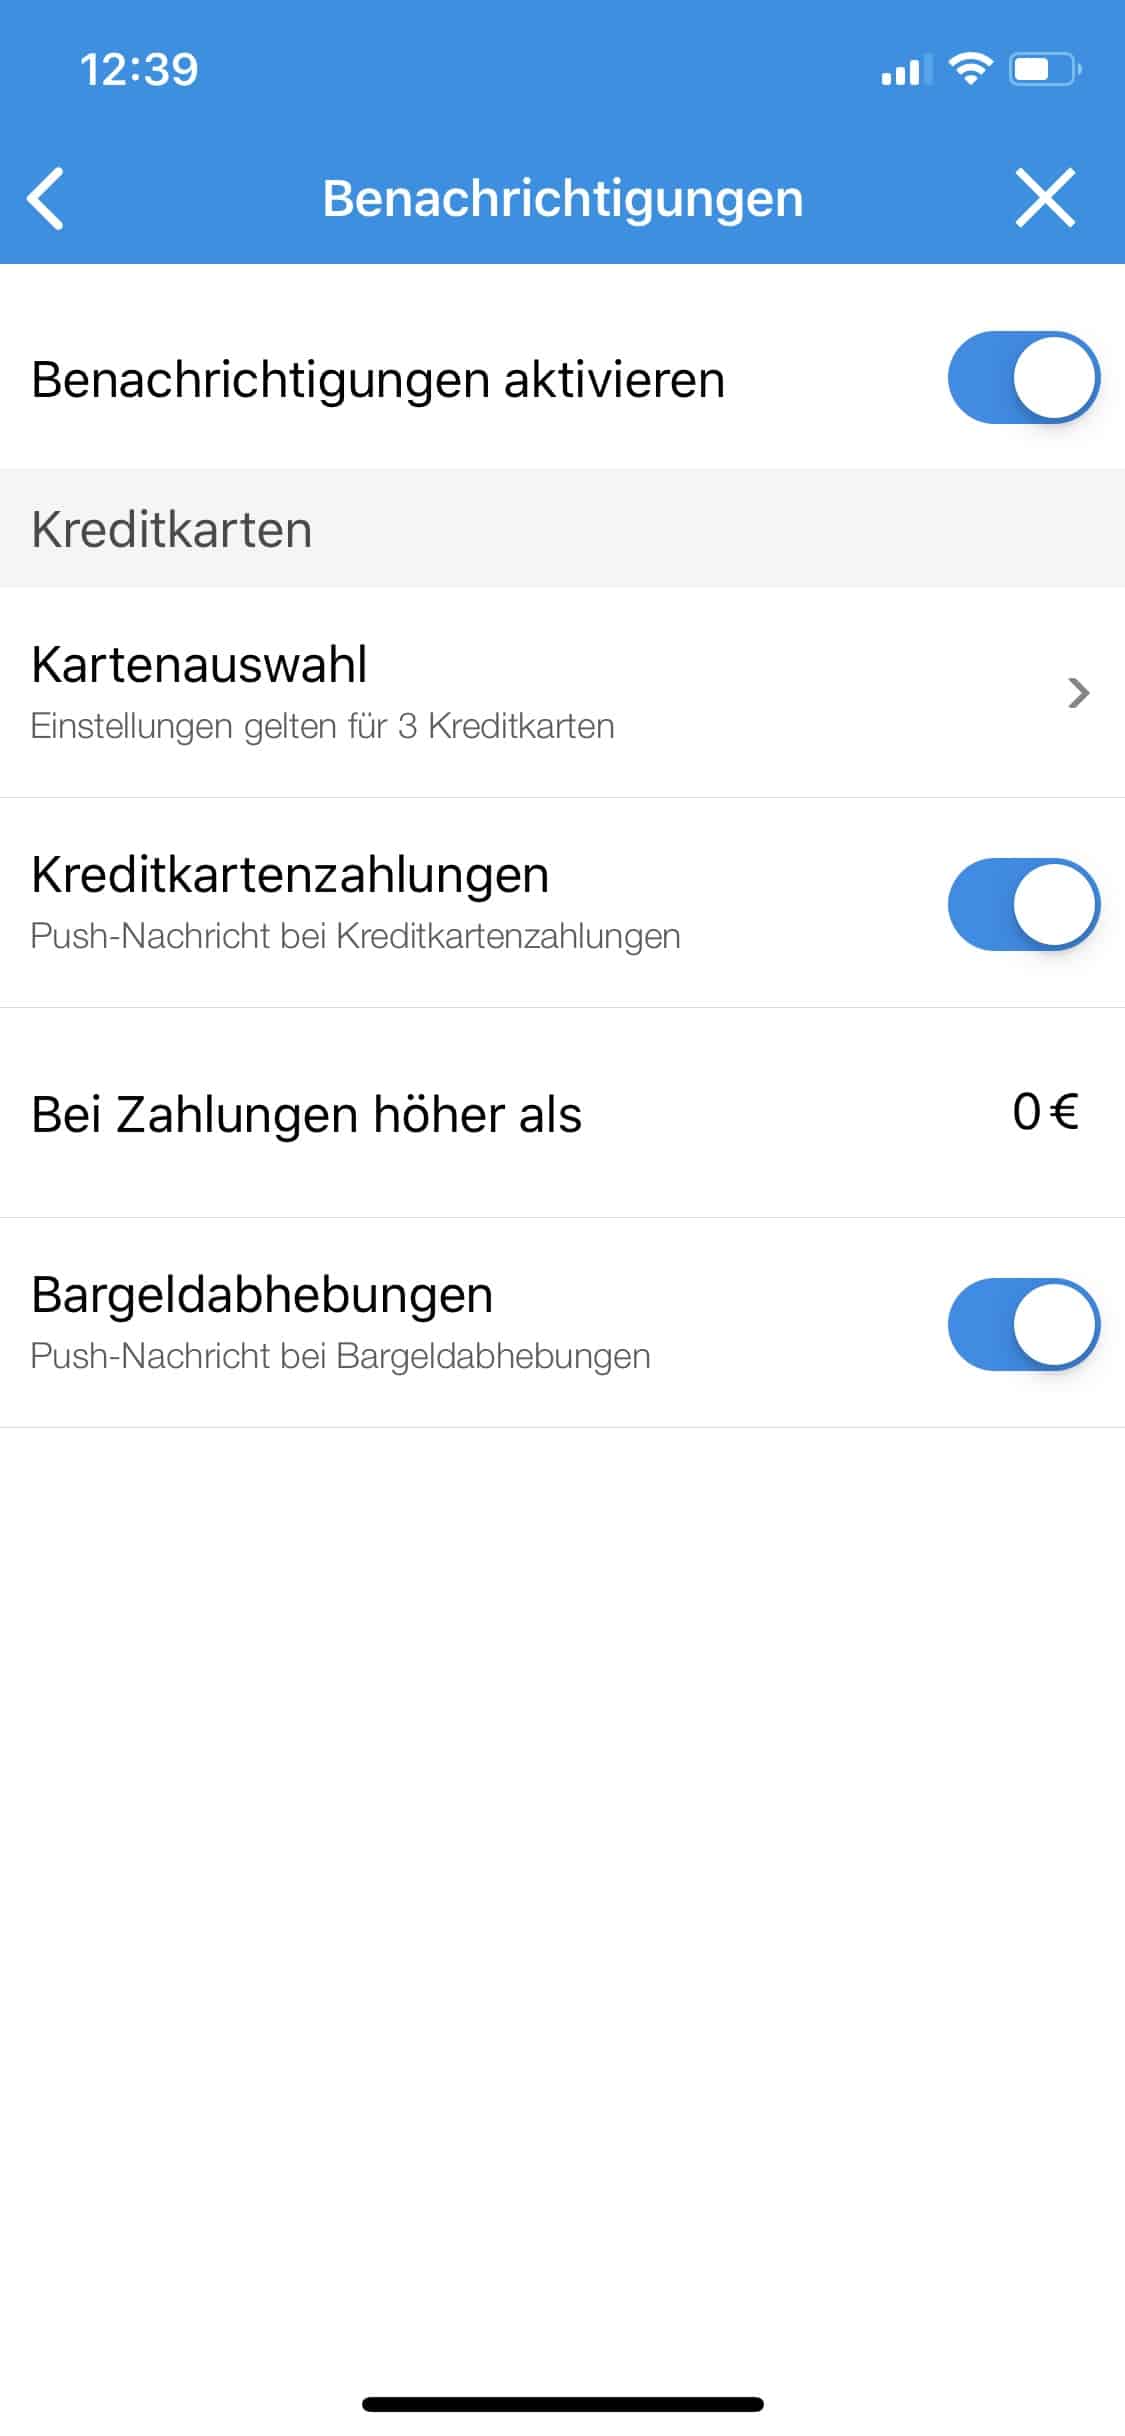 Apple iPhone - DKB-Banking-App - Card Control - Benachrichtigungen